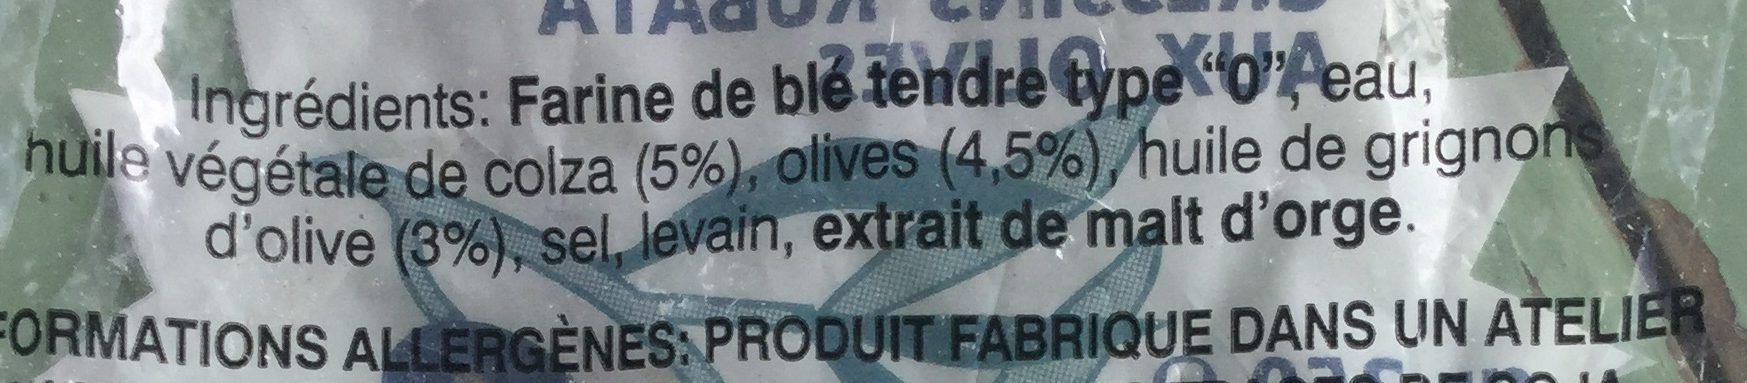 Gressins rubatà aux olives - Ingredients - fr